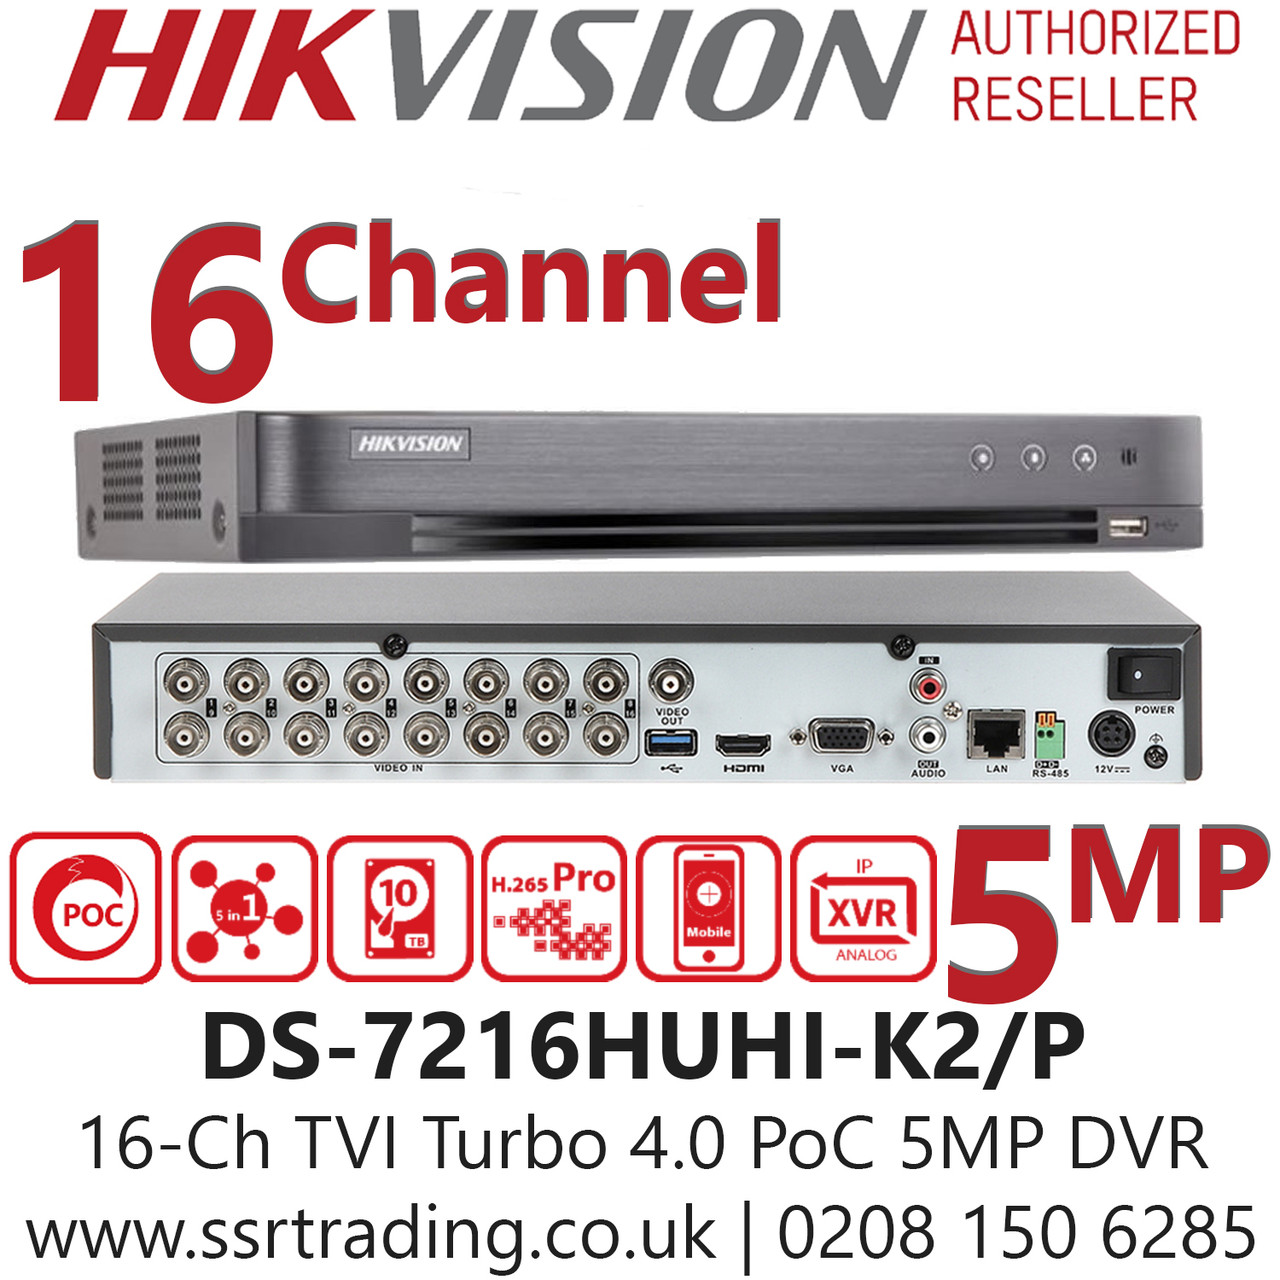 Hikvision Ds 7216huhi K2 P 16 Channel Tvi Turbo 4 0 Poc 5mp Dvr 16ch Cctv Surveillance Recorder With 2 Sata Interface